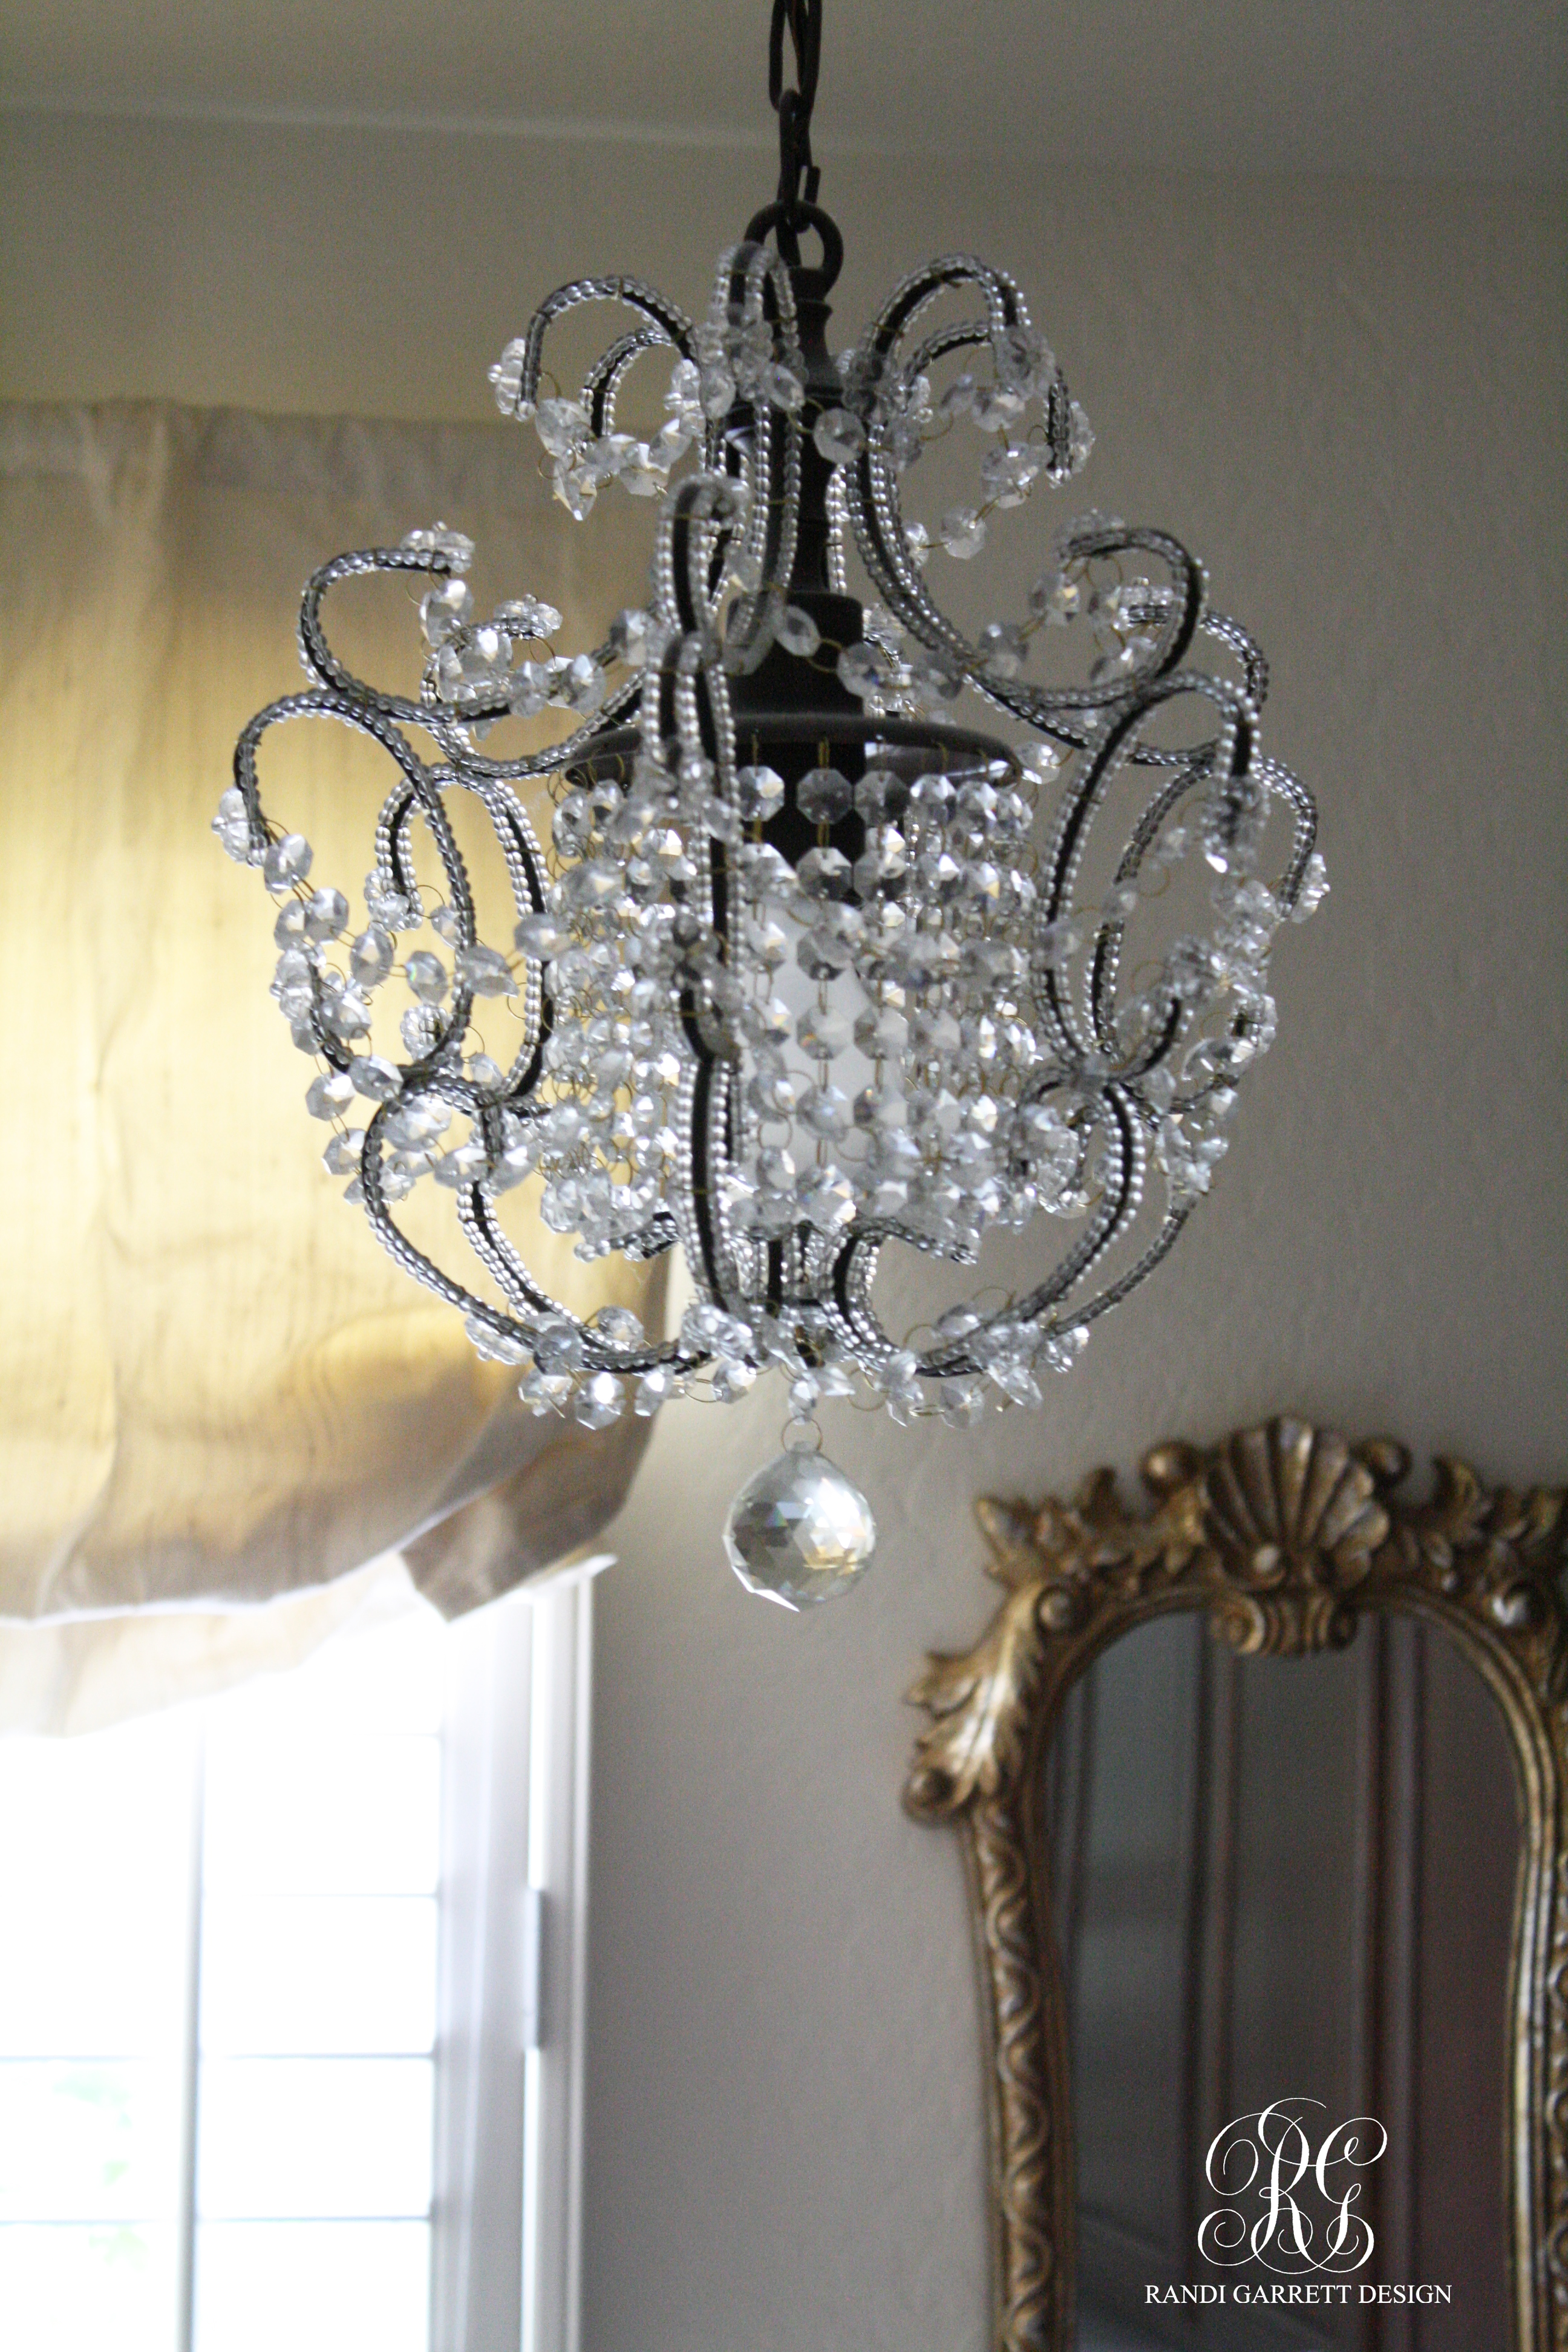 Randi Garrett Design Laundry Room with mini chandelier